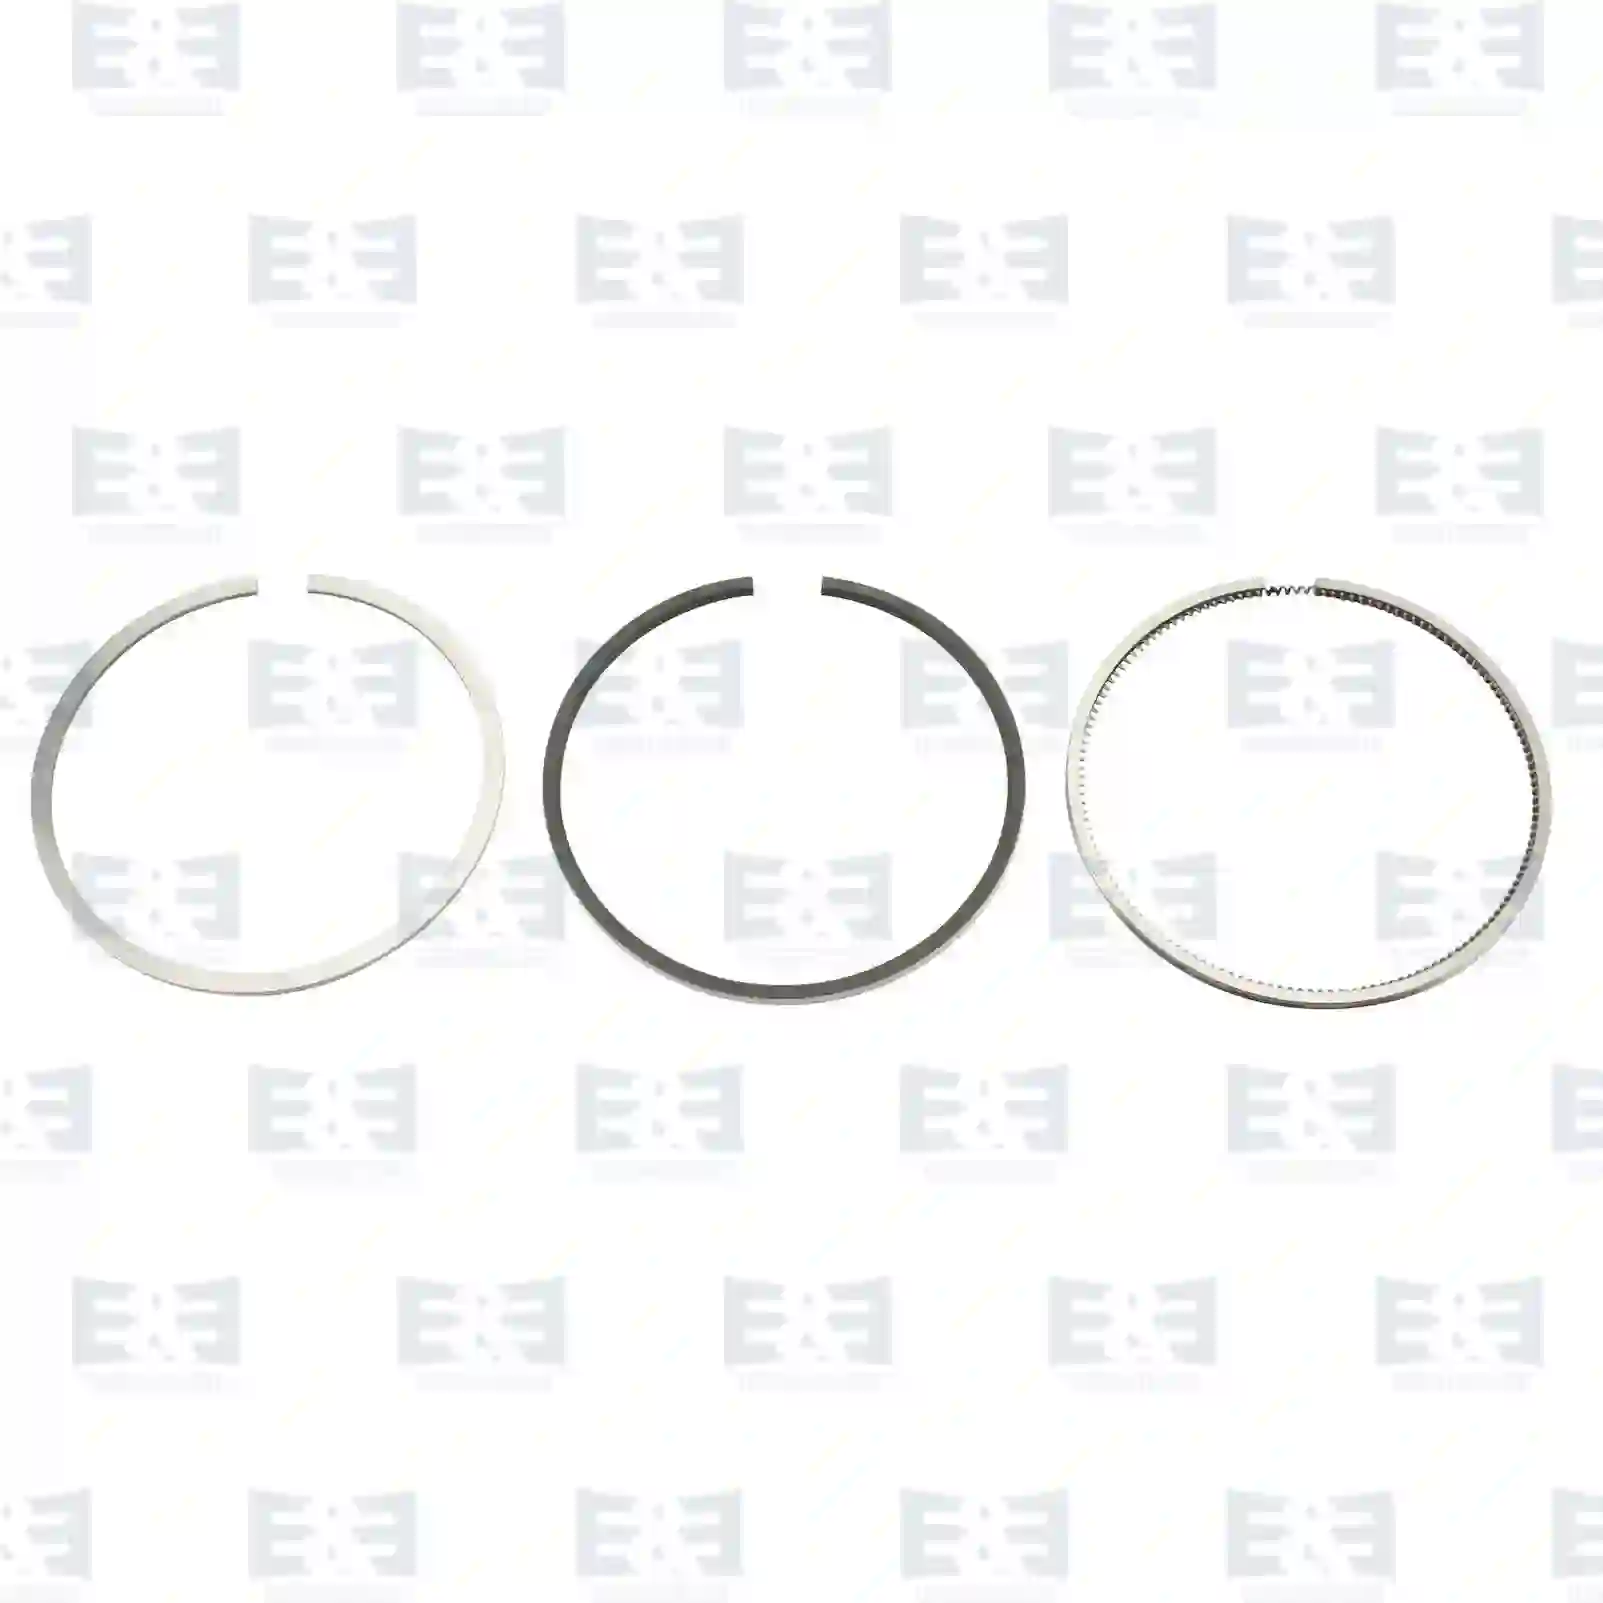  Piston ring kit || E&E Truck Spare Parts | Truck Spare Parts, Auotomotive Spare Parts